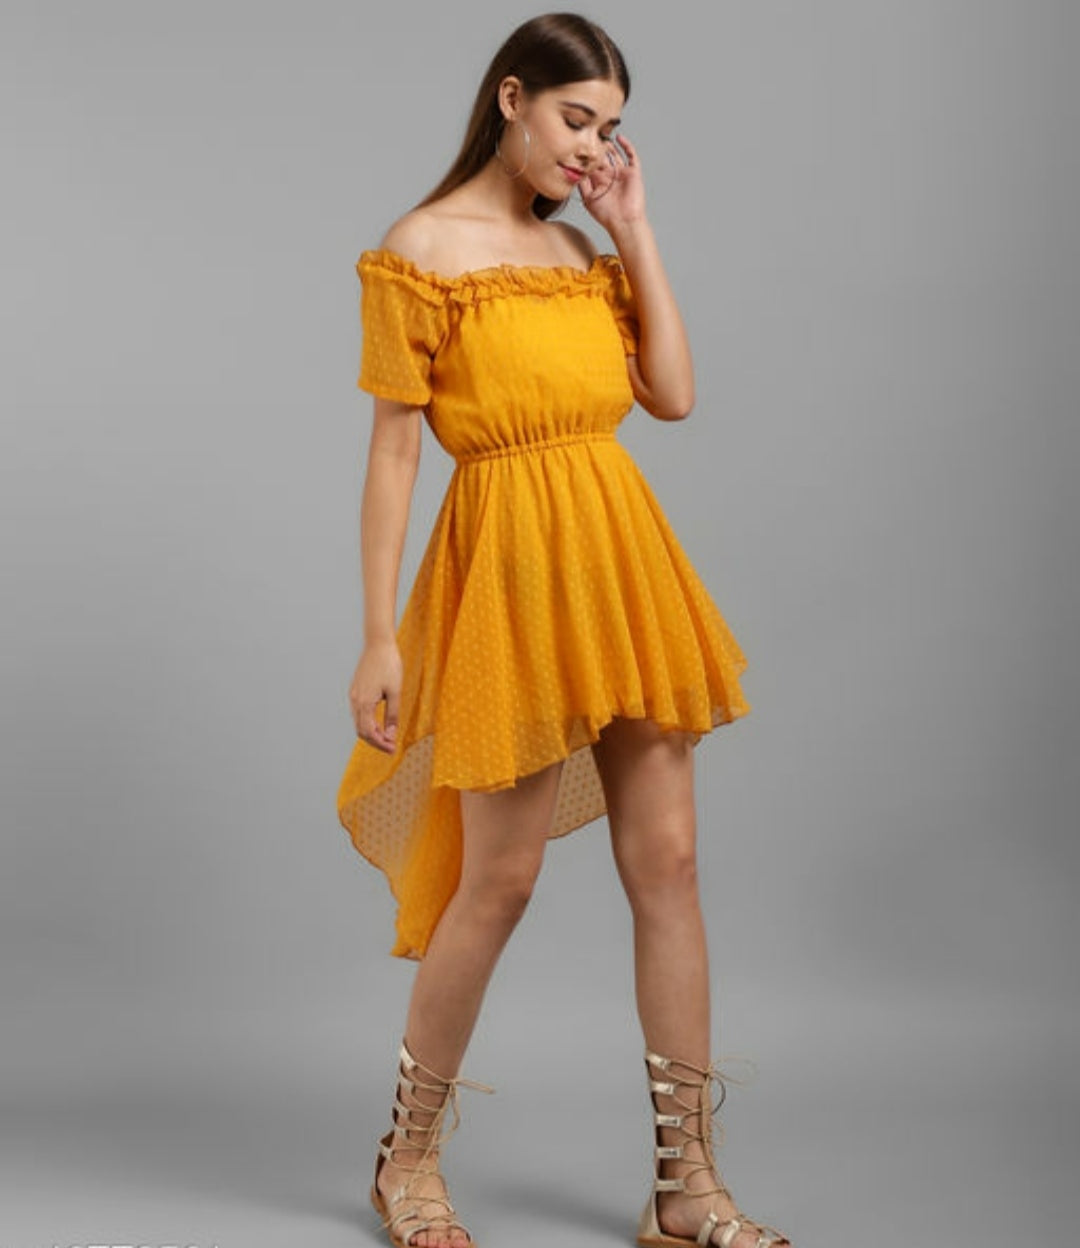 Stylish Nayara Off-shoulder Polkadot Mini Dress.